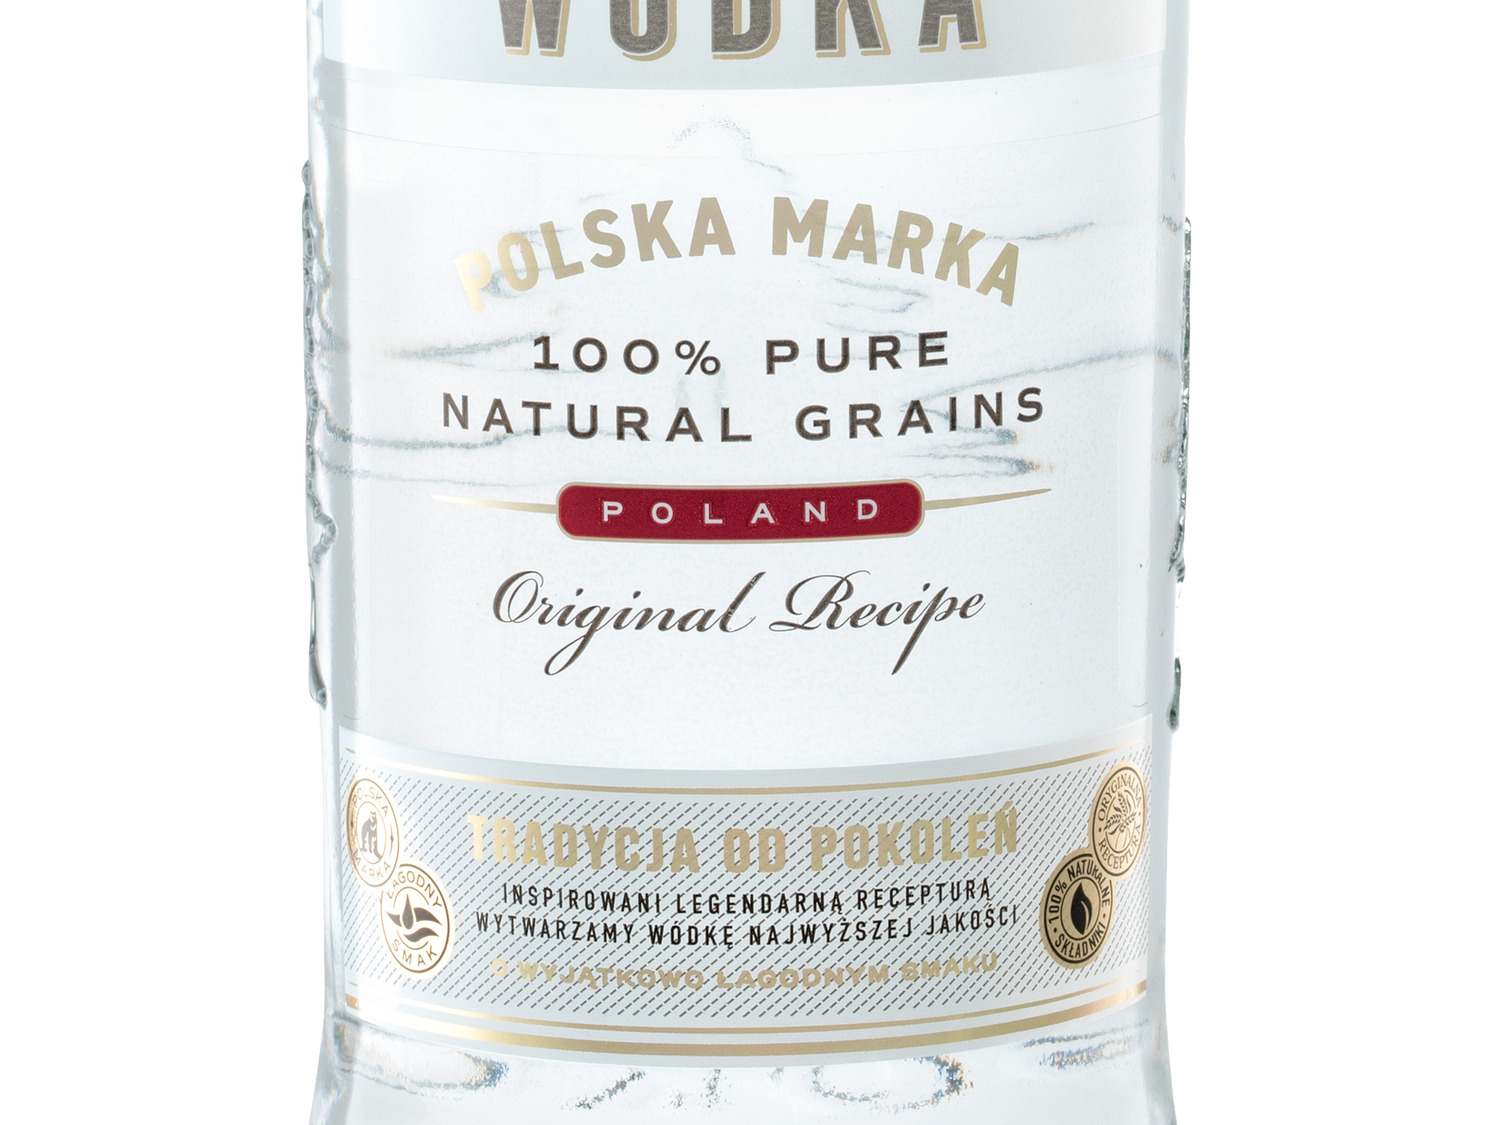 Premium Krupnik Wodka 40% Poland LIDL Vol |